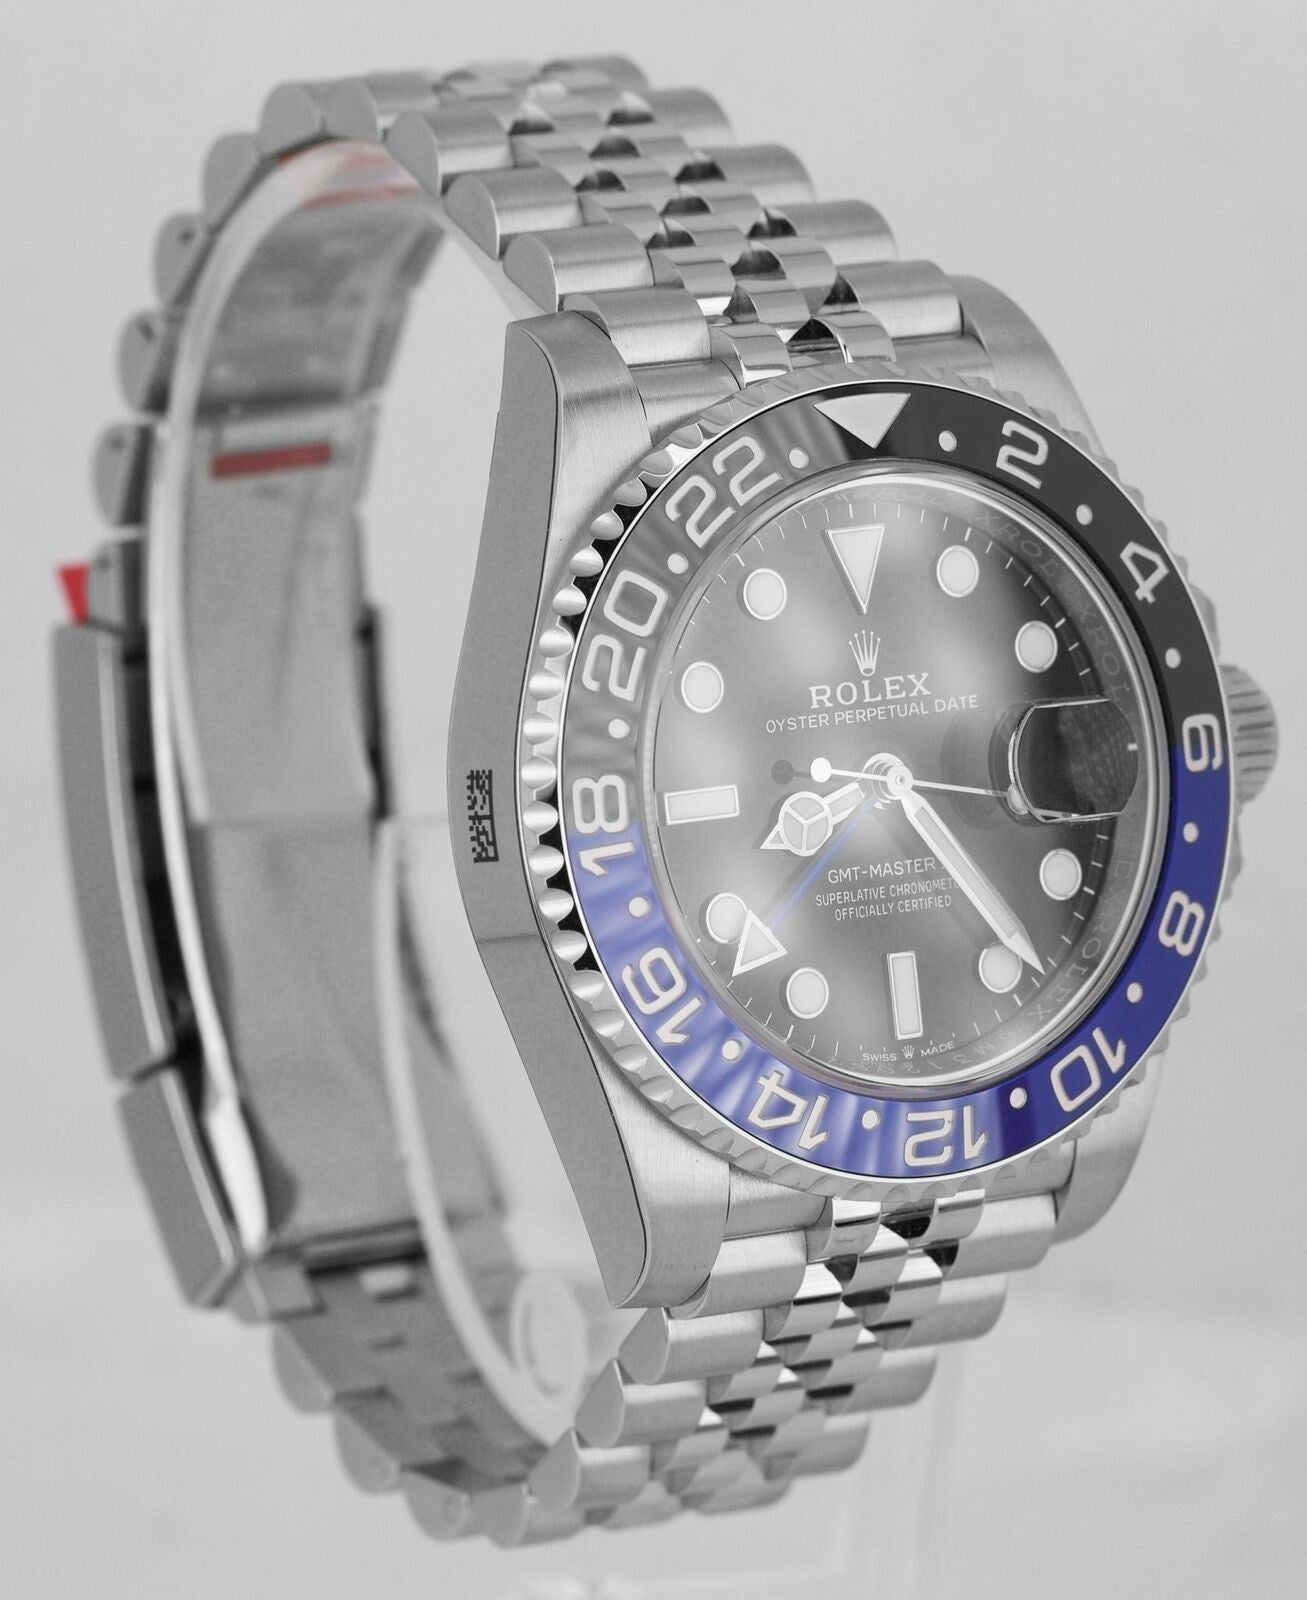 NEW STICKERED Rolex GMT-Master II Batman Black Blue Jubilee 126710 BLNR Watch